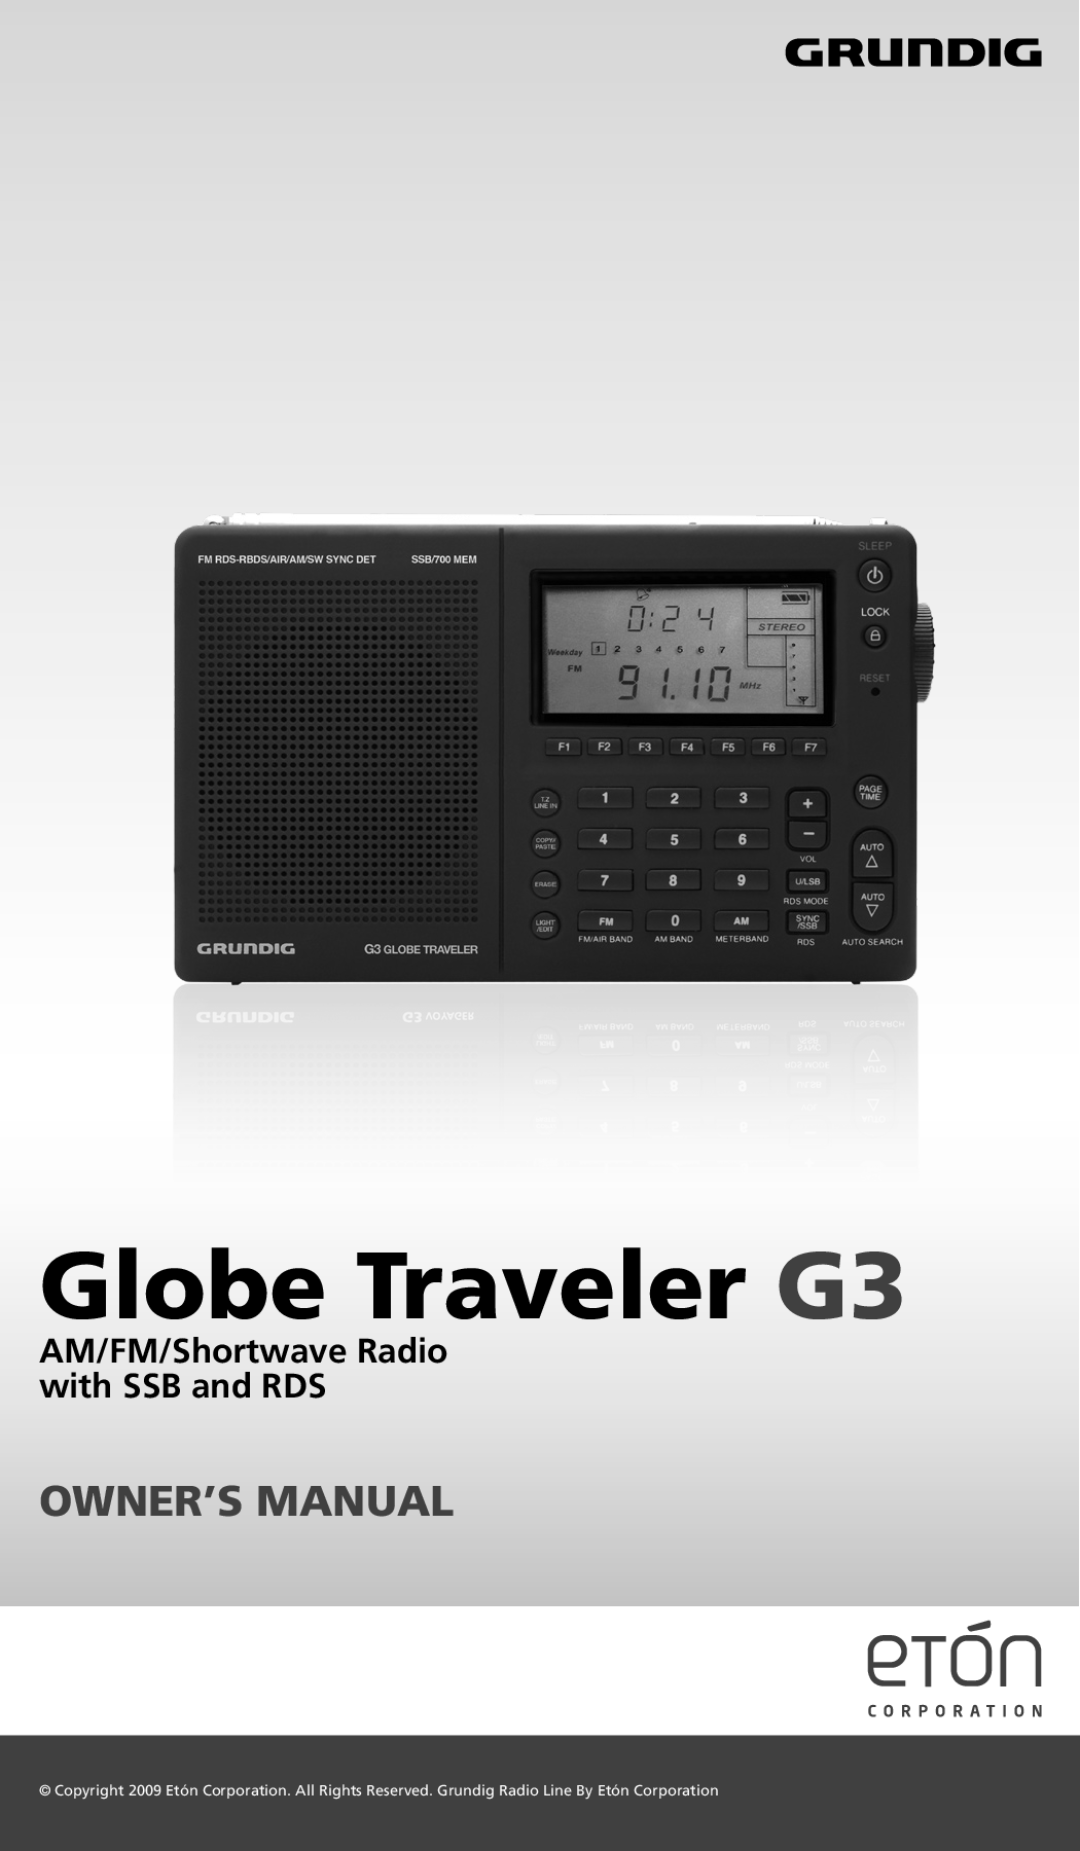 Eton owner manual Globe Traveler G3, Owner’S Manual, AM/FM/Shortwave Radio with SSB and RDS 